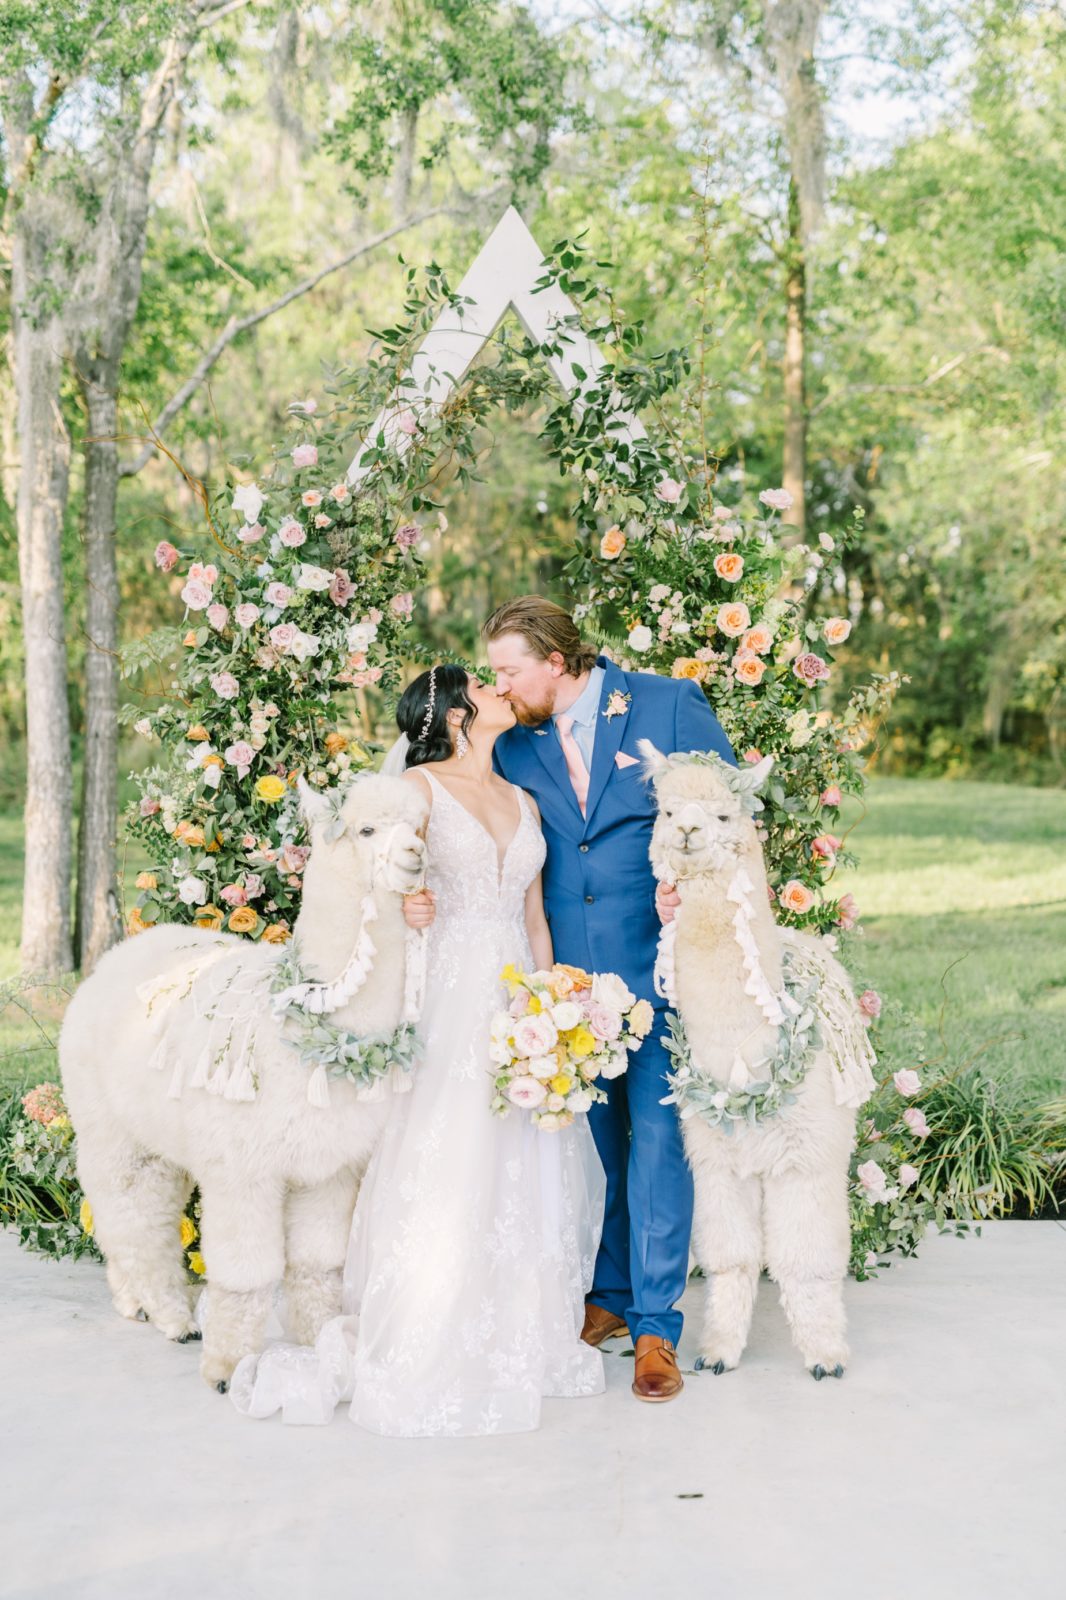 Bride and groom kiss while holding white llamas at their wedding by Christina Elliott Photography. llamas wedding alpacas wedding #ChristinaElliottPhotography #ChristinaElliottWeddings #Houstonwedding #TheSpringsVenue #EastHoustonweddings #sayIdo